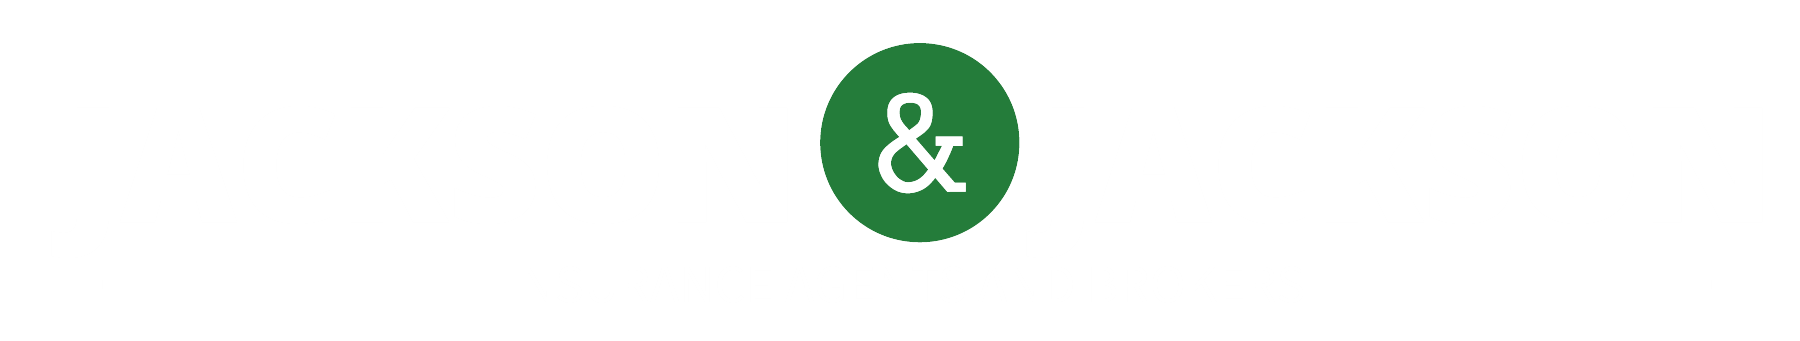 Jackson & Jackson Insurance Agents and Brokers